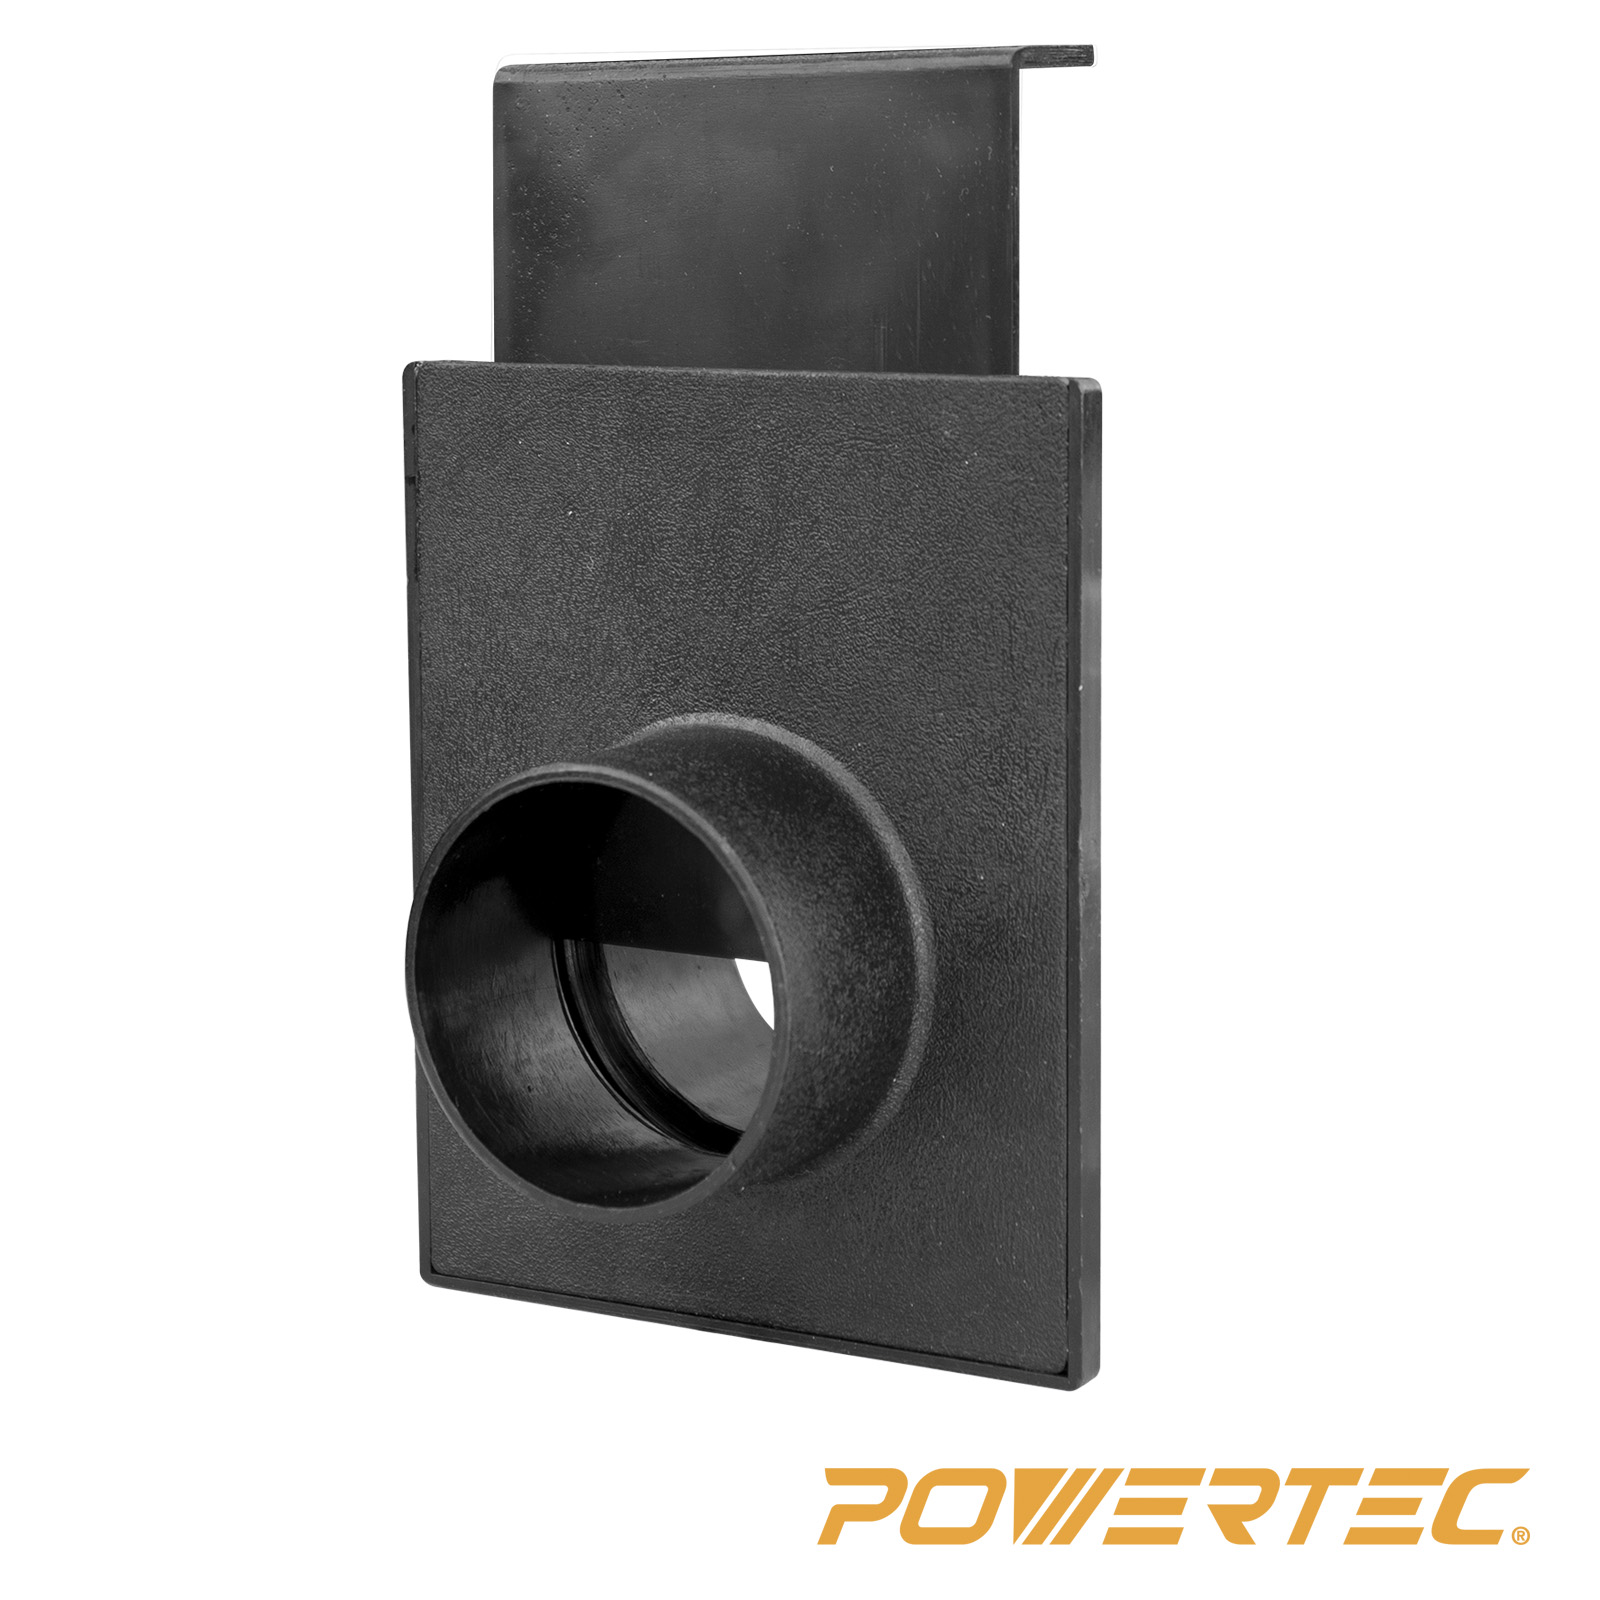 Powertec 70133 2-1/2-Inch Blast Gate for Vacuum/Dust Collector